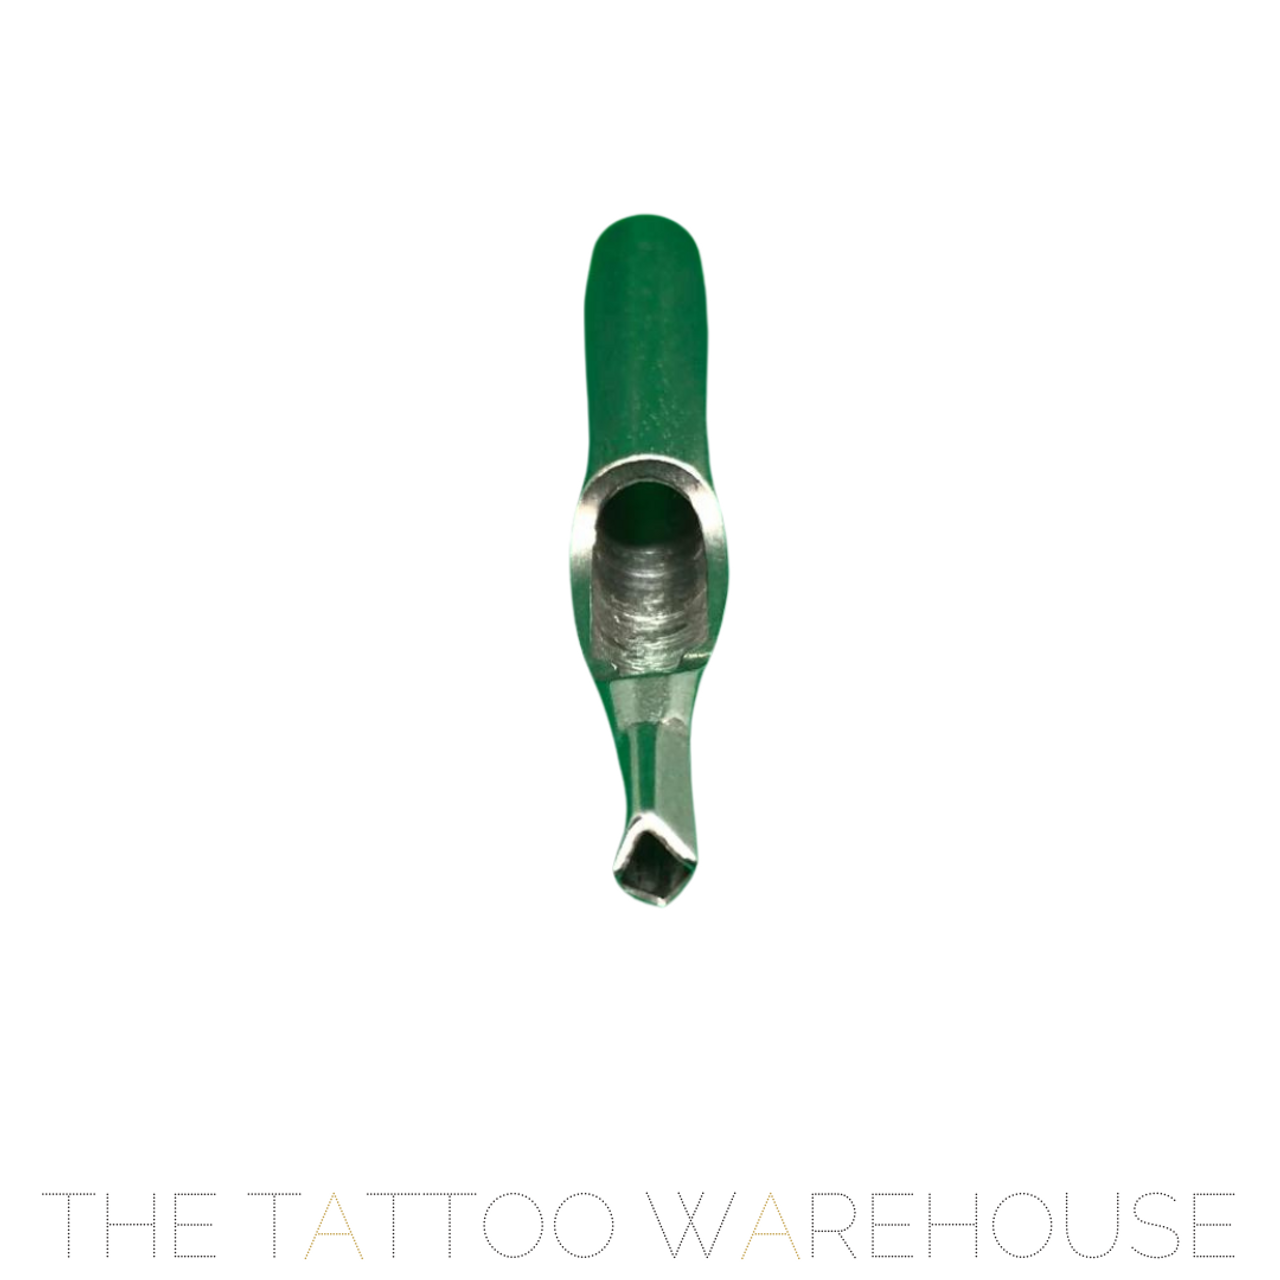 Buy Autdor Tattoo Tip Tubes Kits - 22pcs Tattoo Stainless Steel Tips Set  Mixed RT FT DT Round/Flat/Diamond Tattoo Tips Tubes for Tattoo Machine Gun  Tattoo Needles Tattoo Supplies Tattoo Kit Online